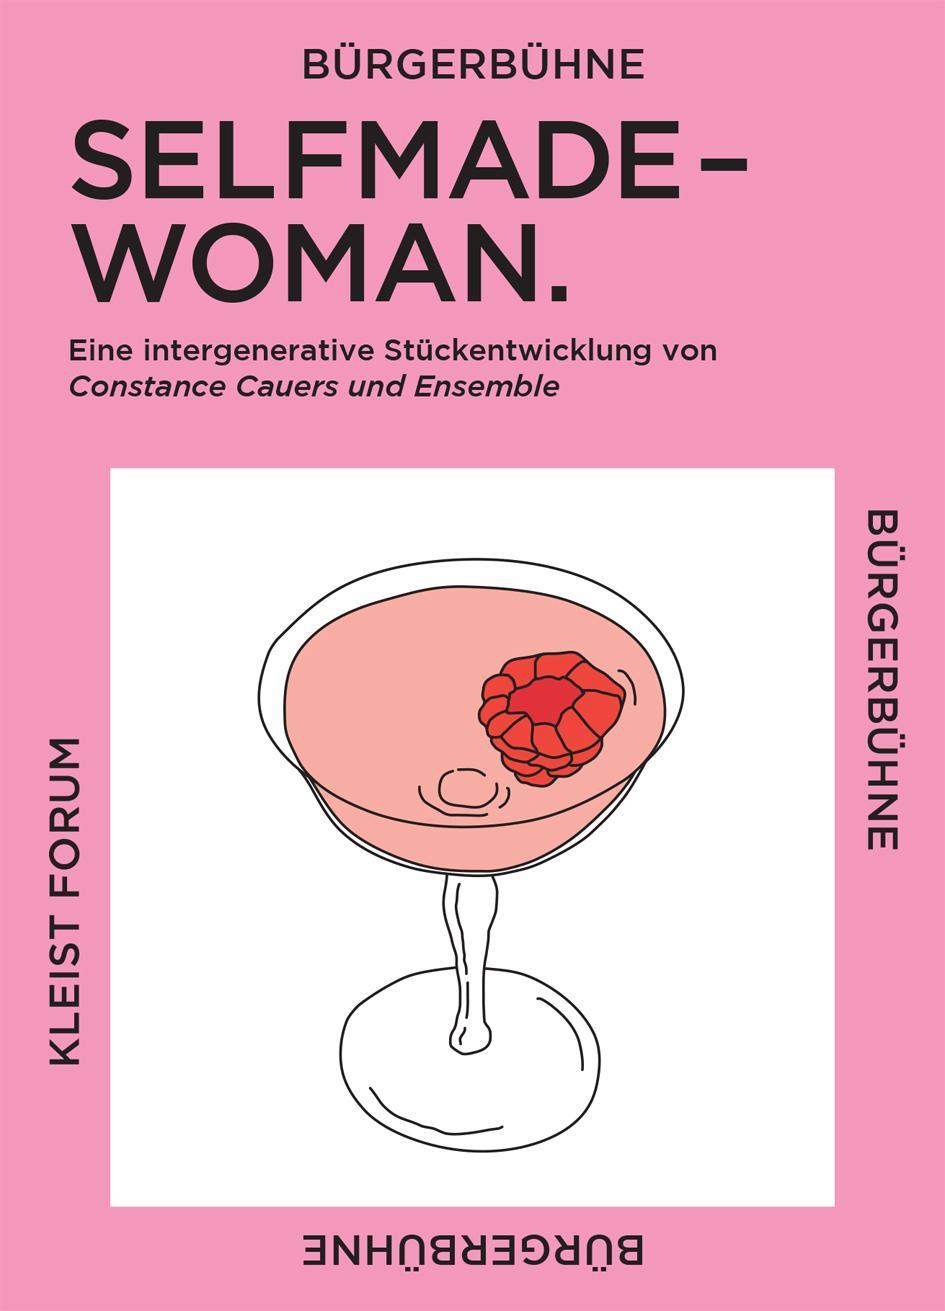 Programm-Plakat des Stückes Selfmadewoman in der Bürgerbühne im Kleistforum © Maja Kristin Harden